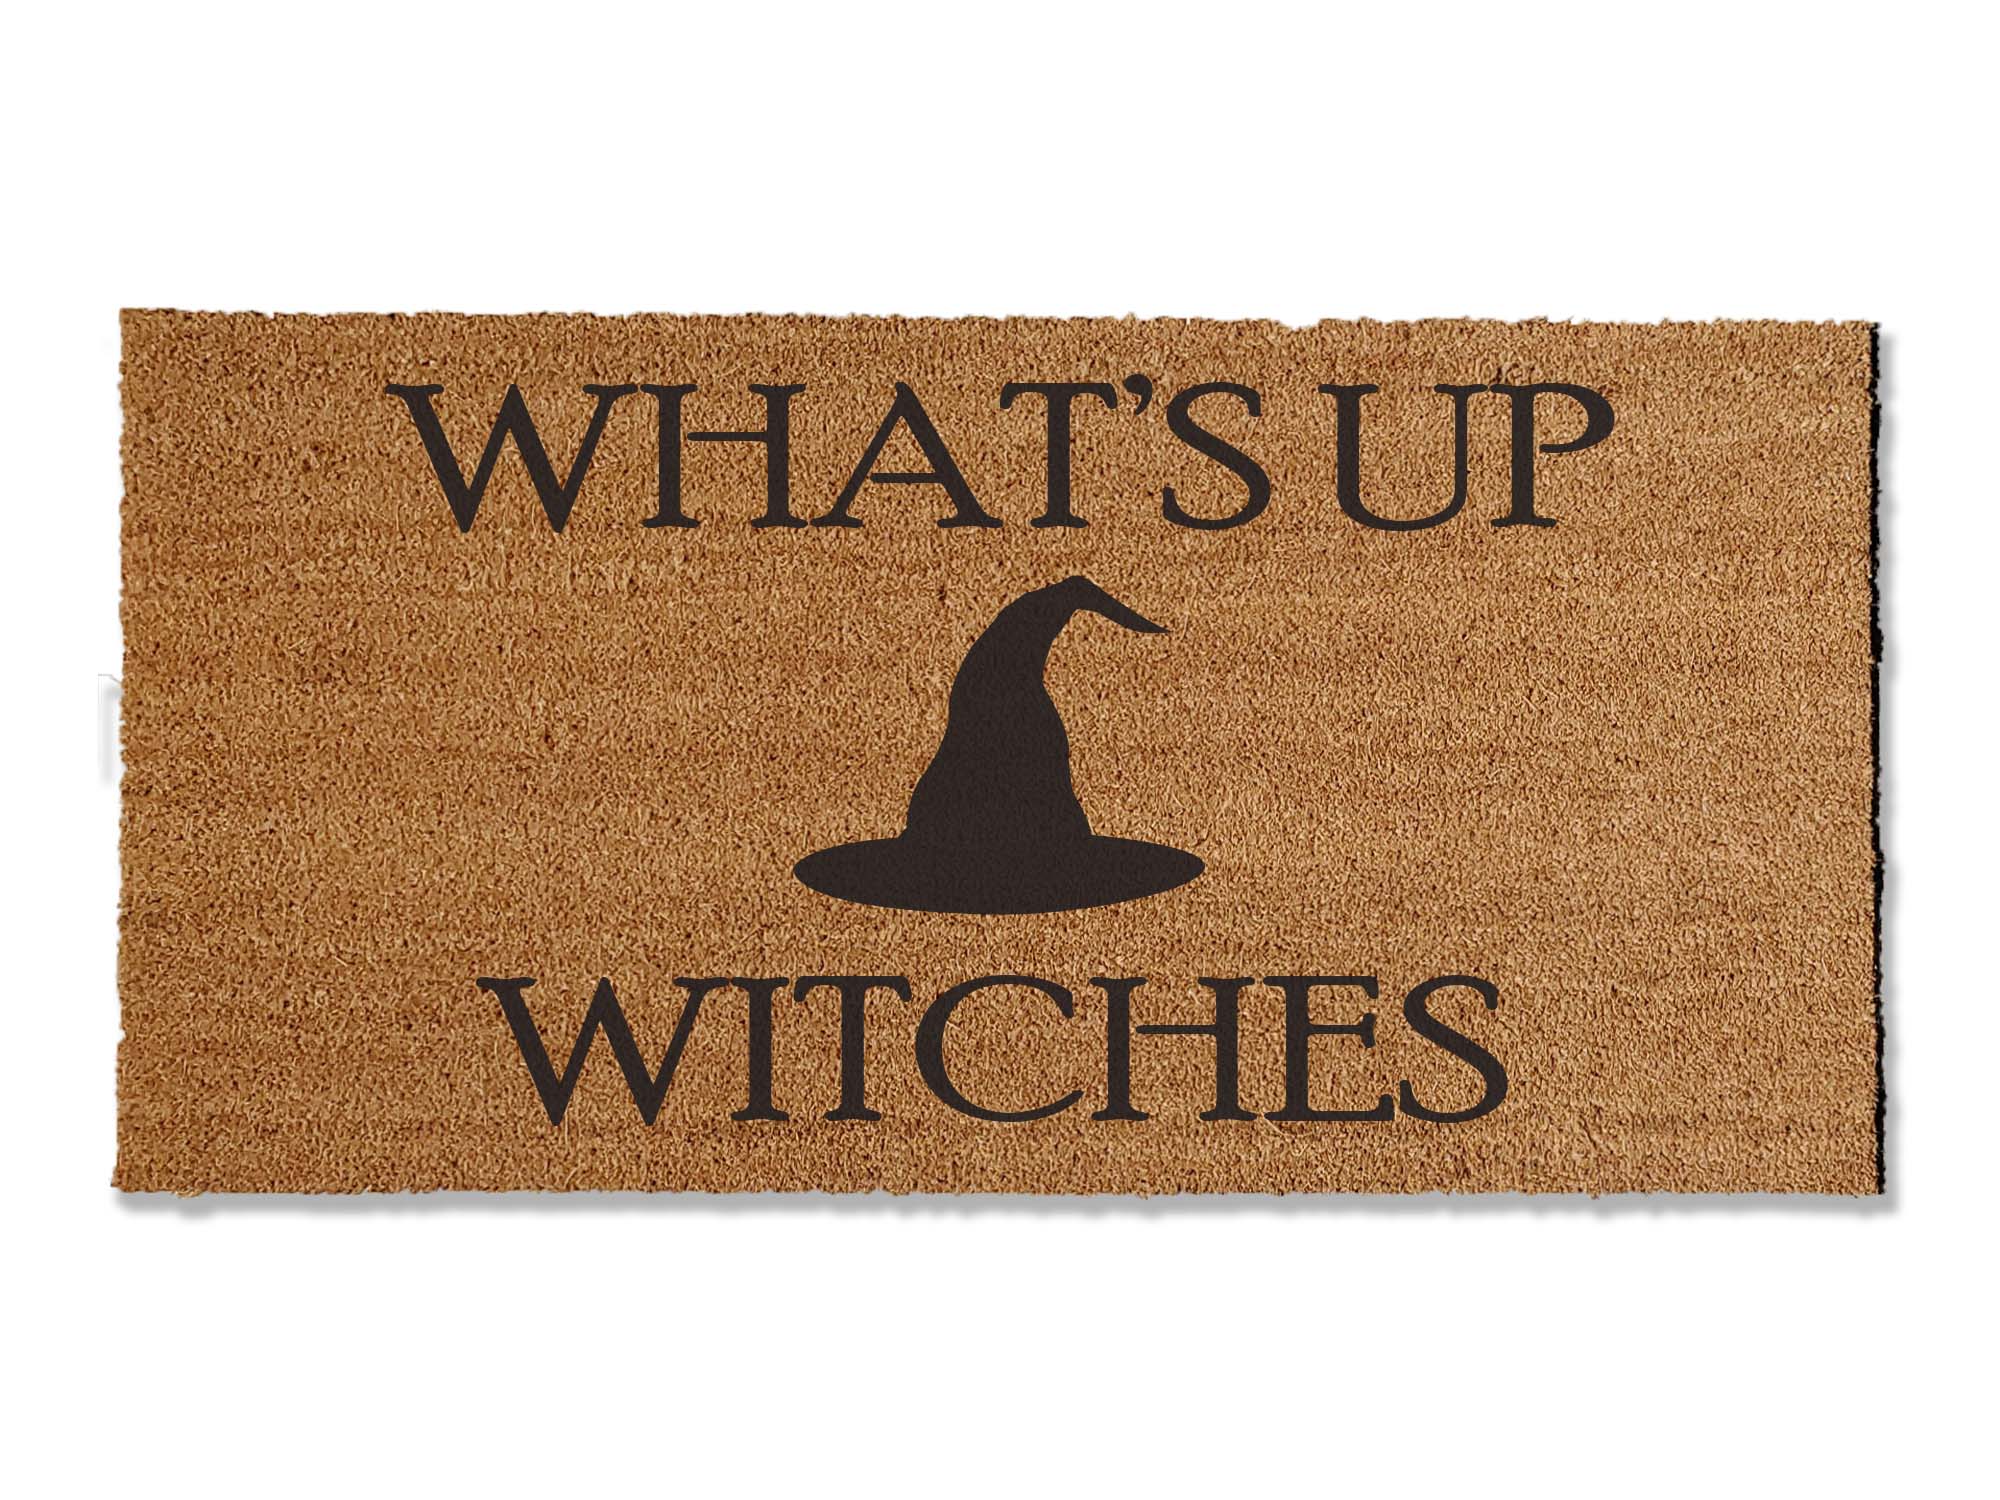 What's Up Witches Halloween Doormat